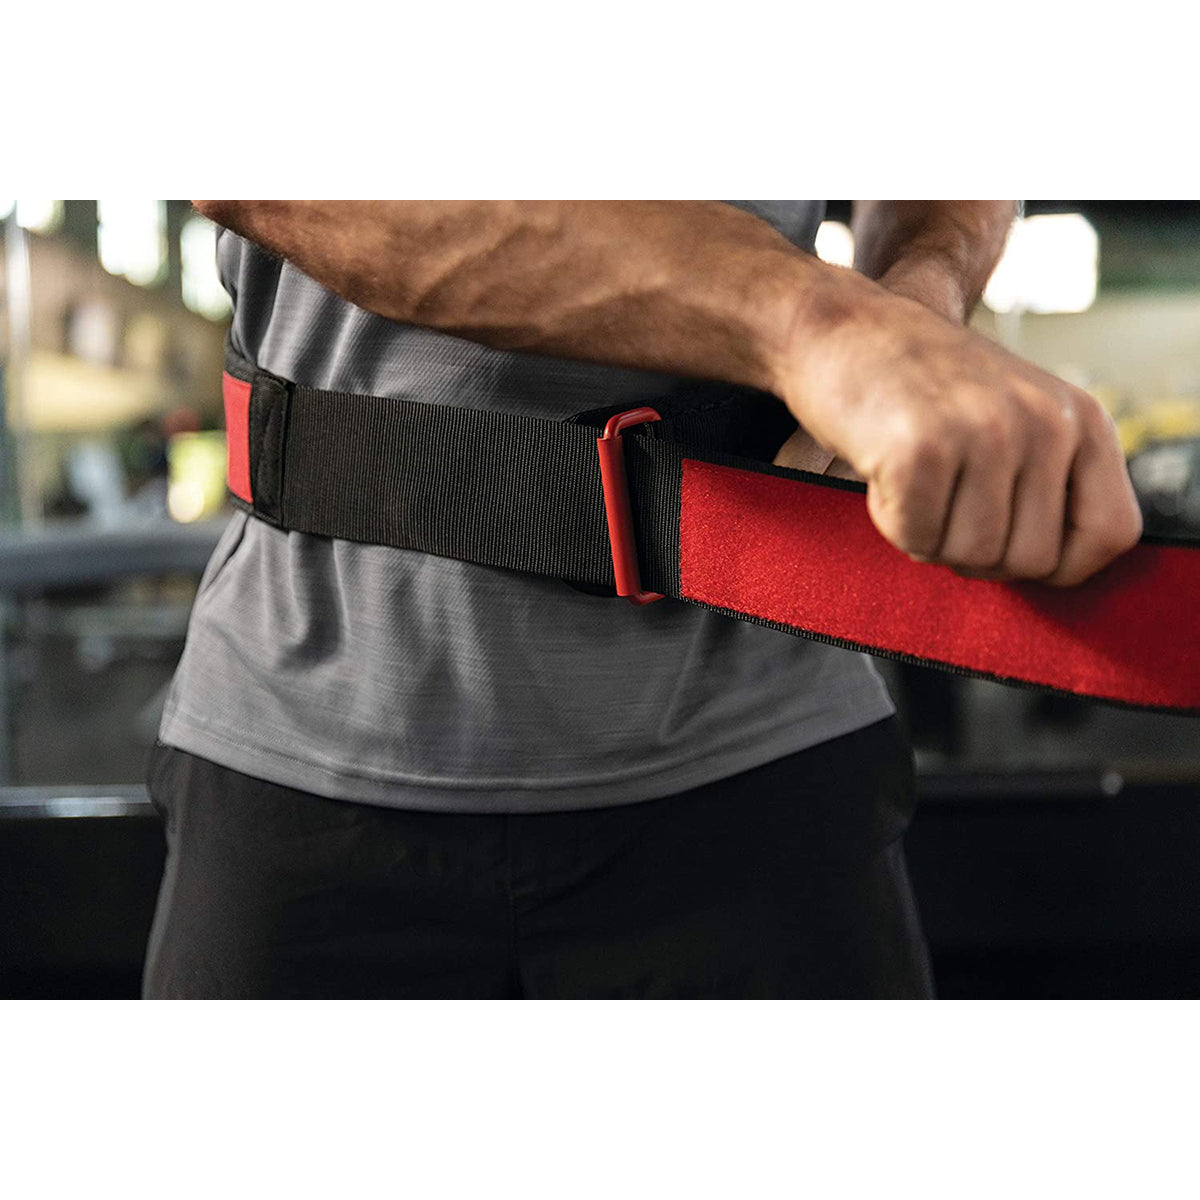 Harbinger HexCore 4.5" Weight Lifting Belt - Red Harbinger